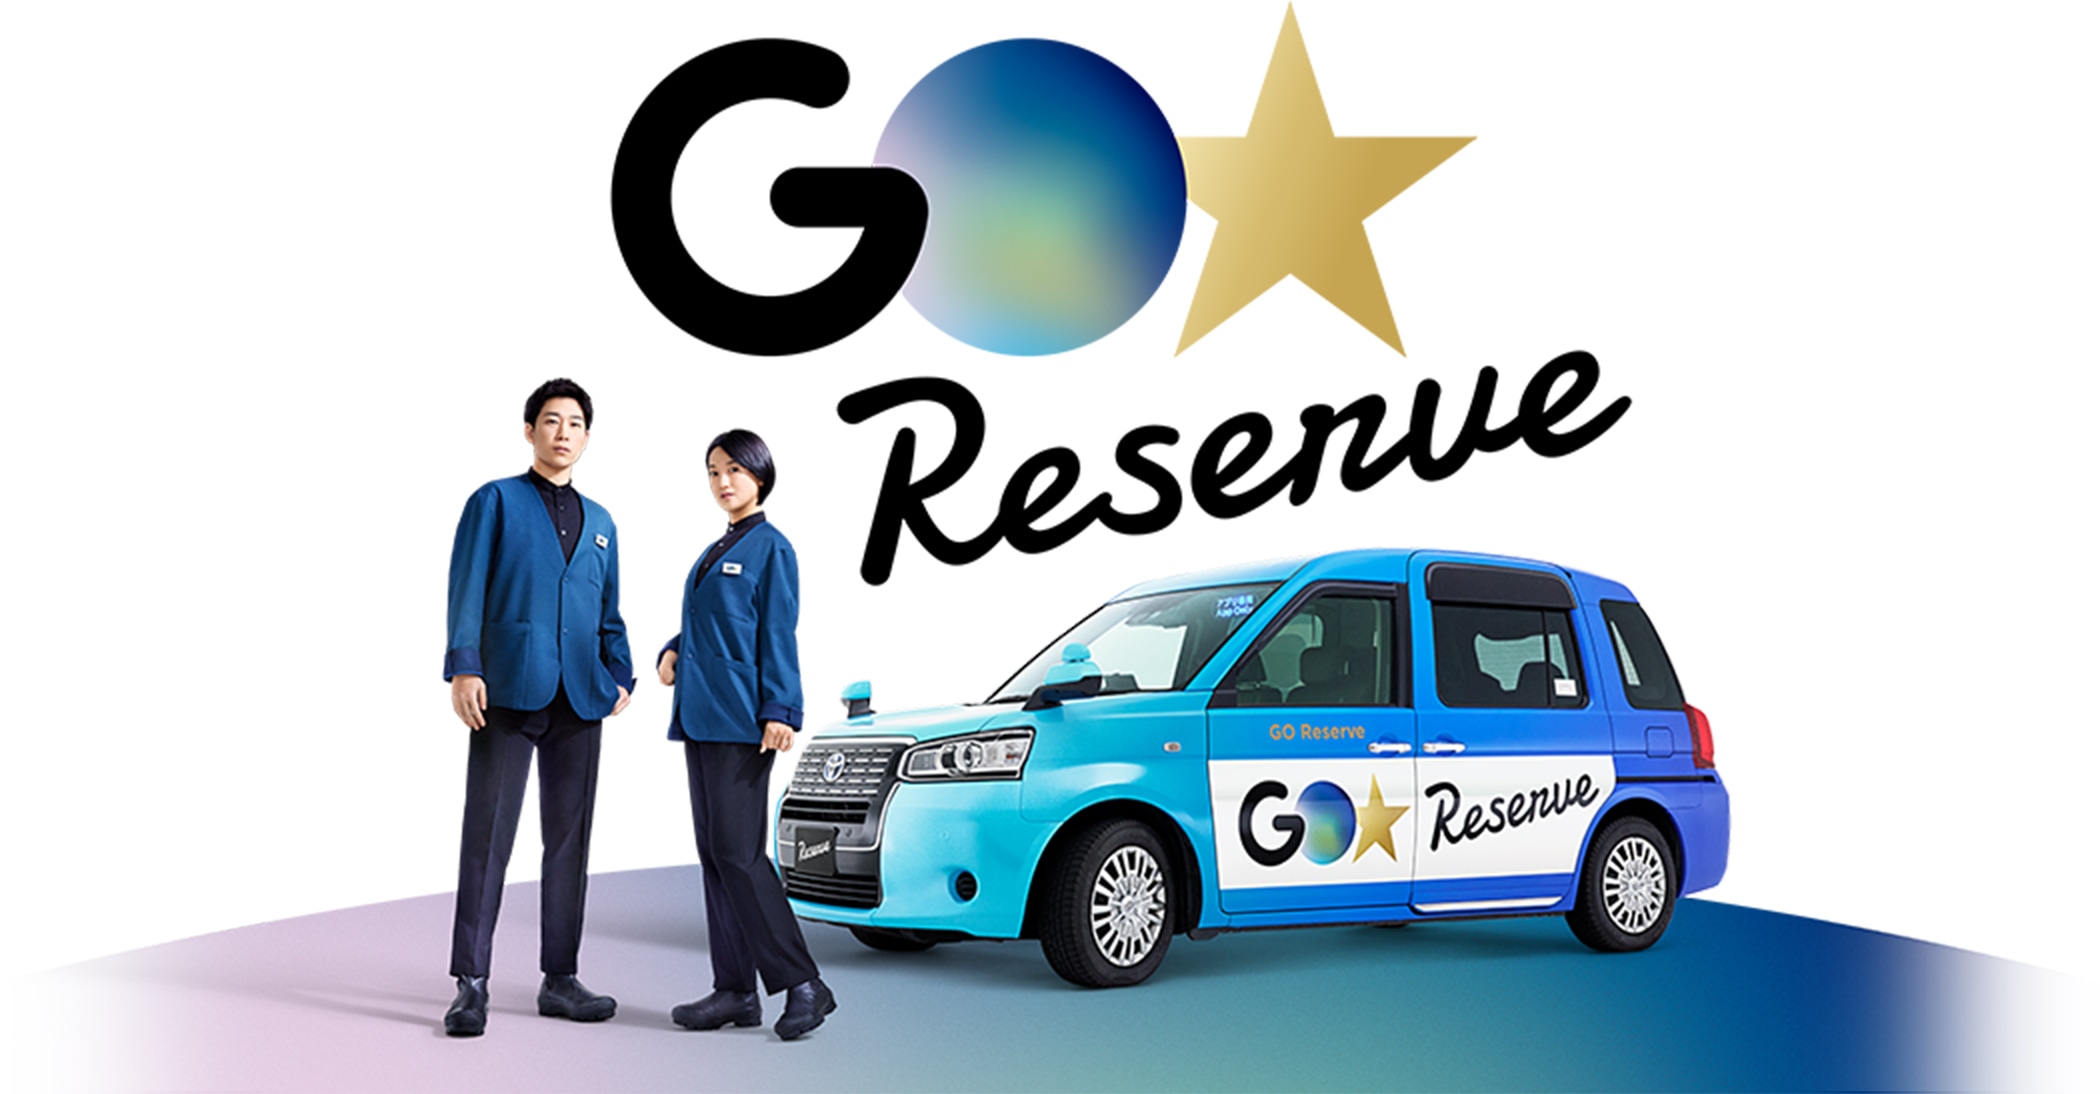 GO reserve